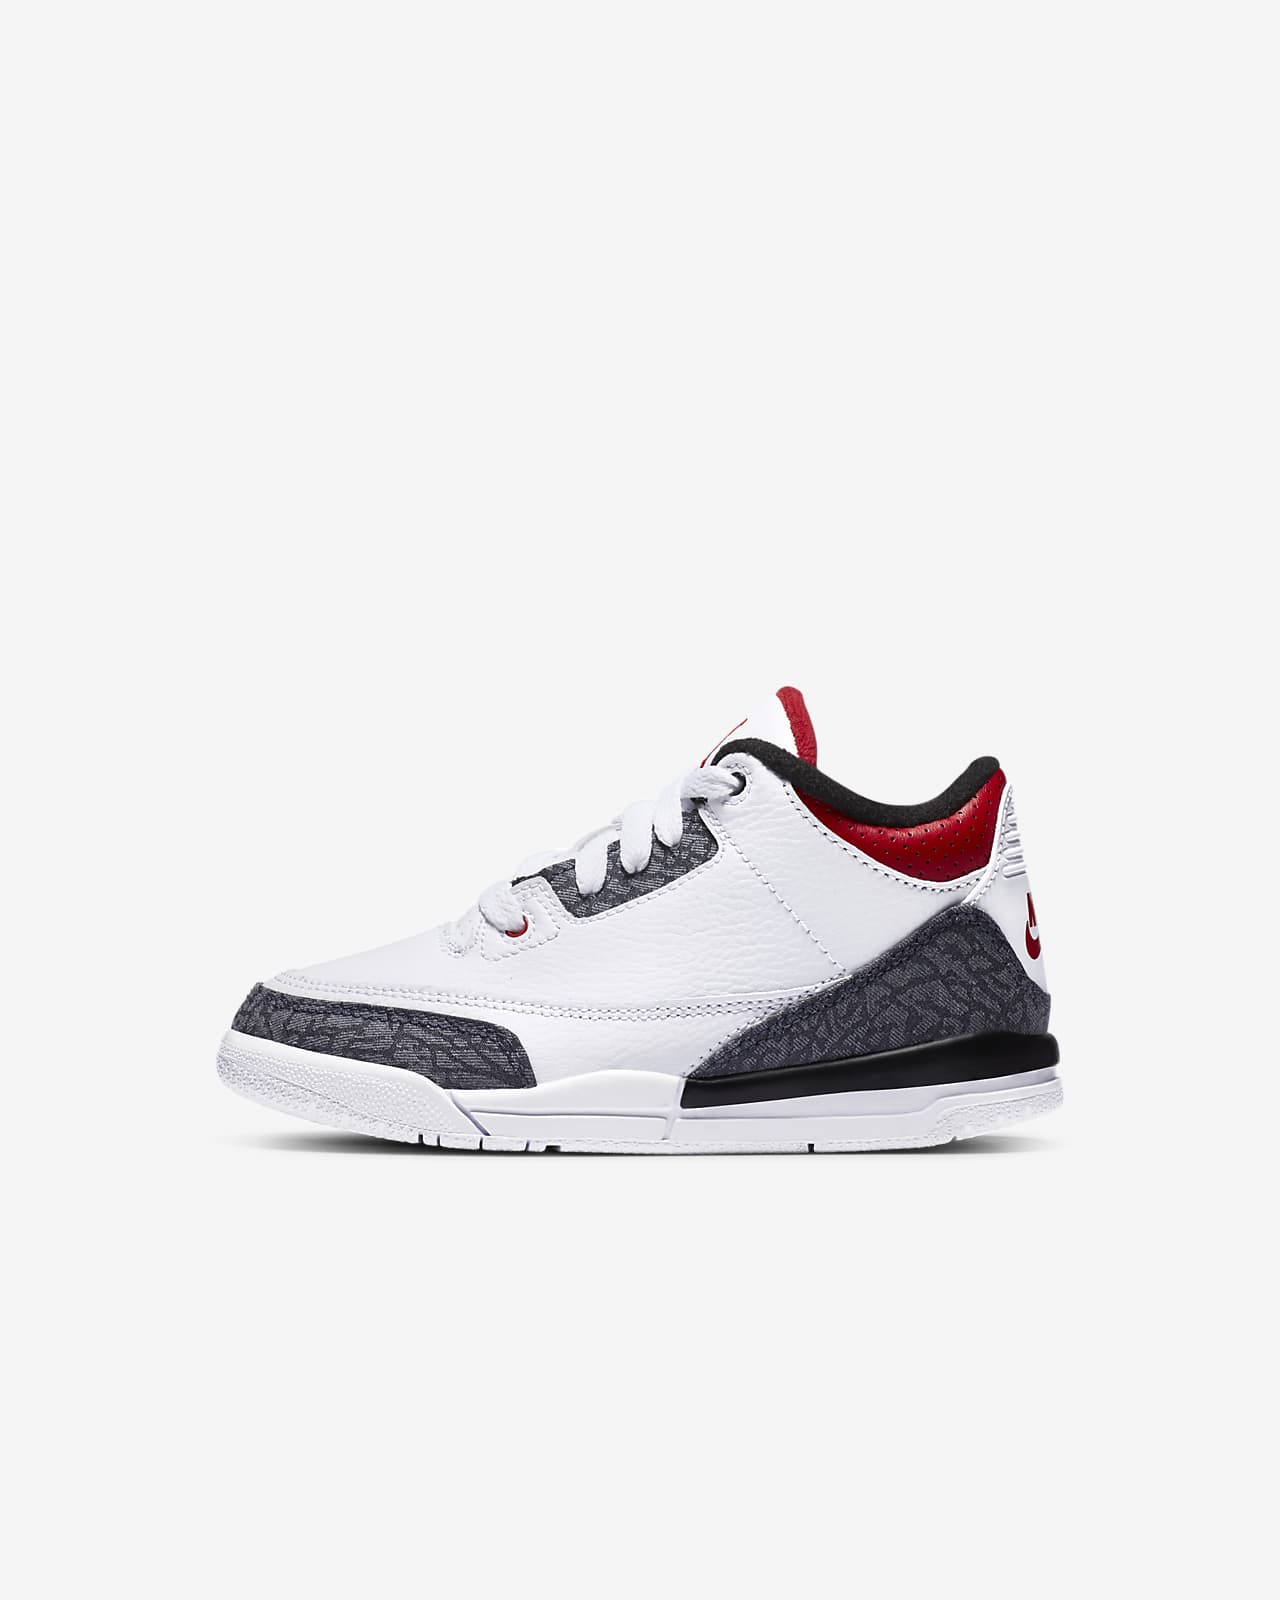 Jordan 3 Retro SE 小童鞋款。Nike TW